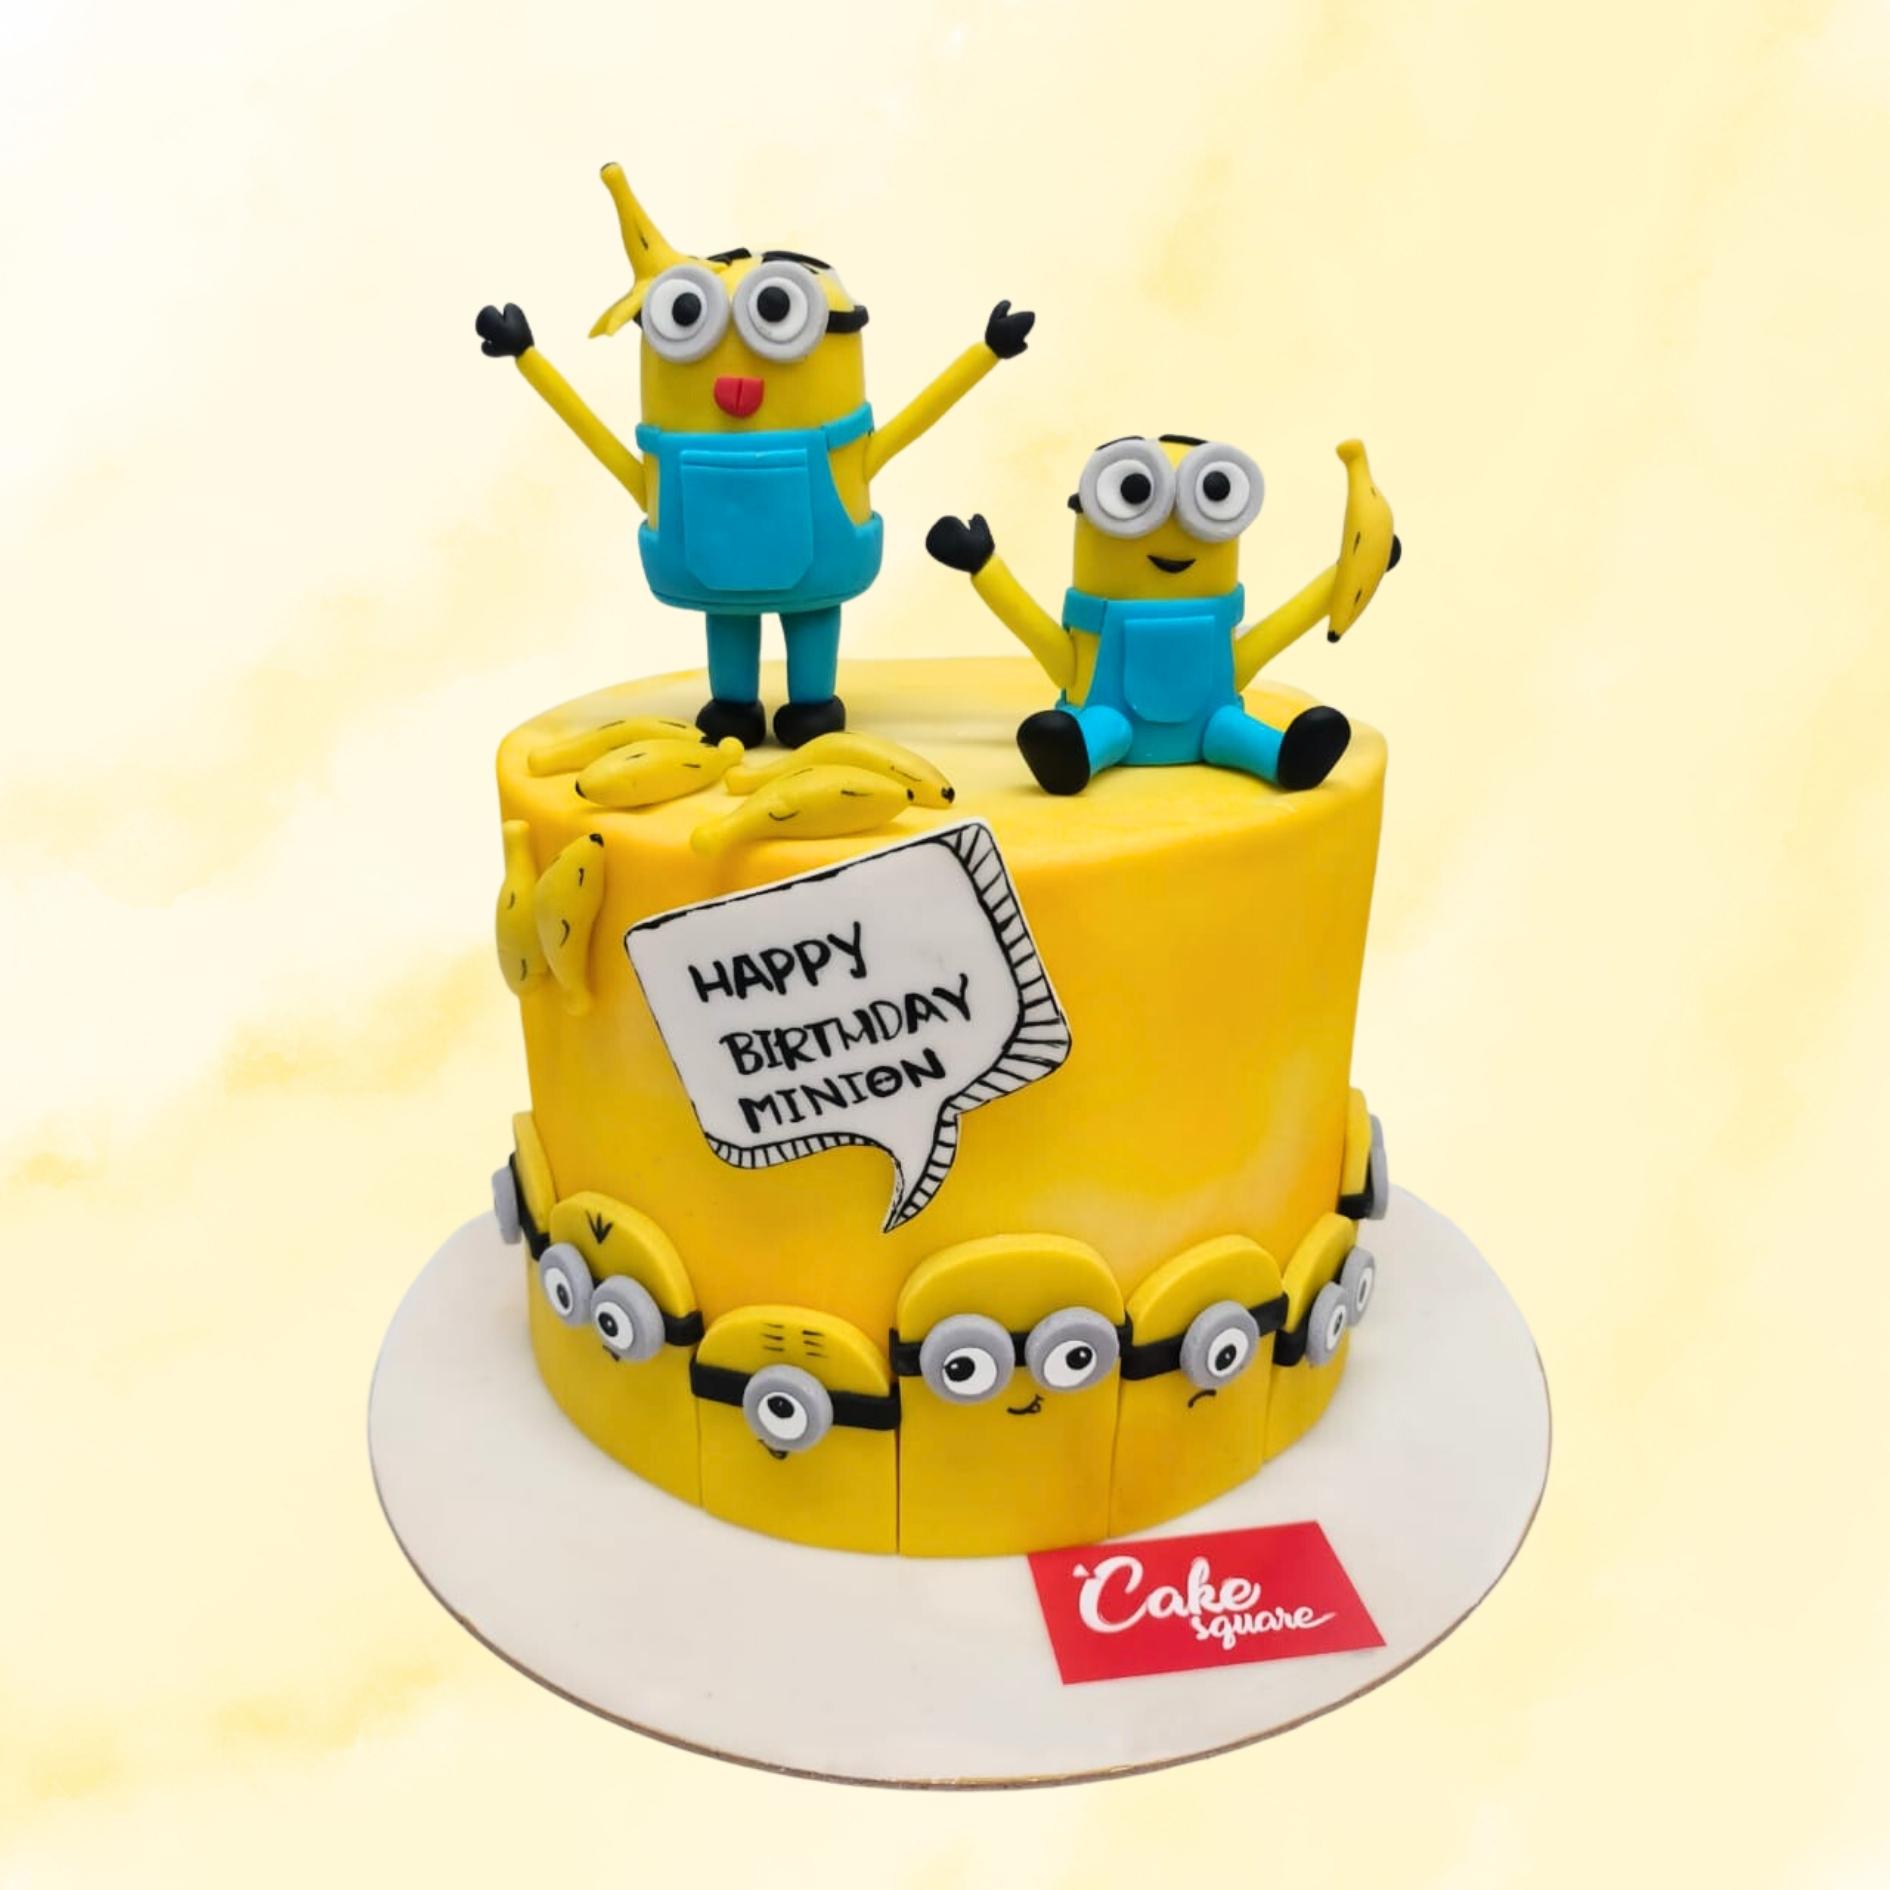 Share more than 75 minion cake design latest - awesomeenglish.edu.vn